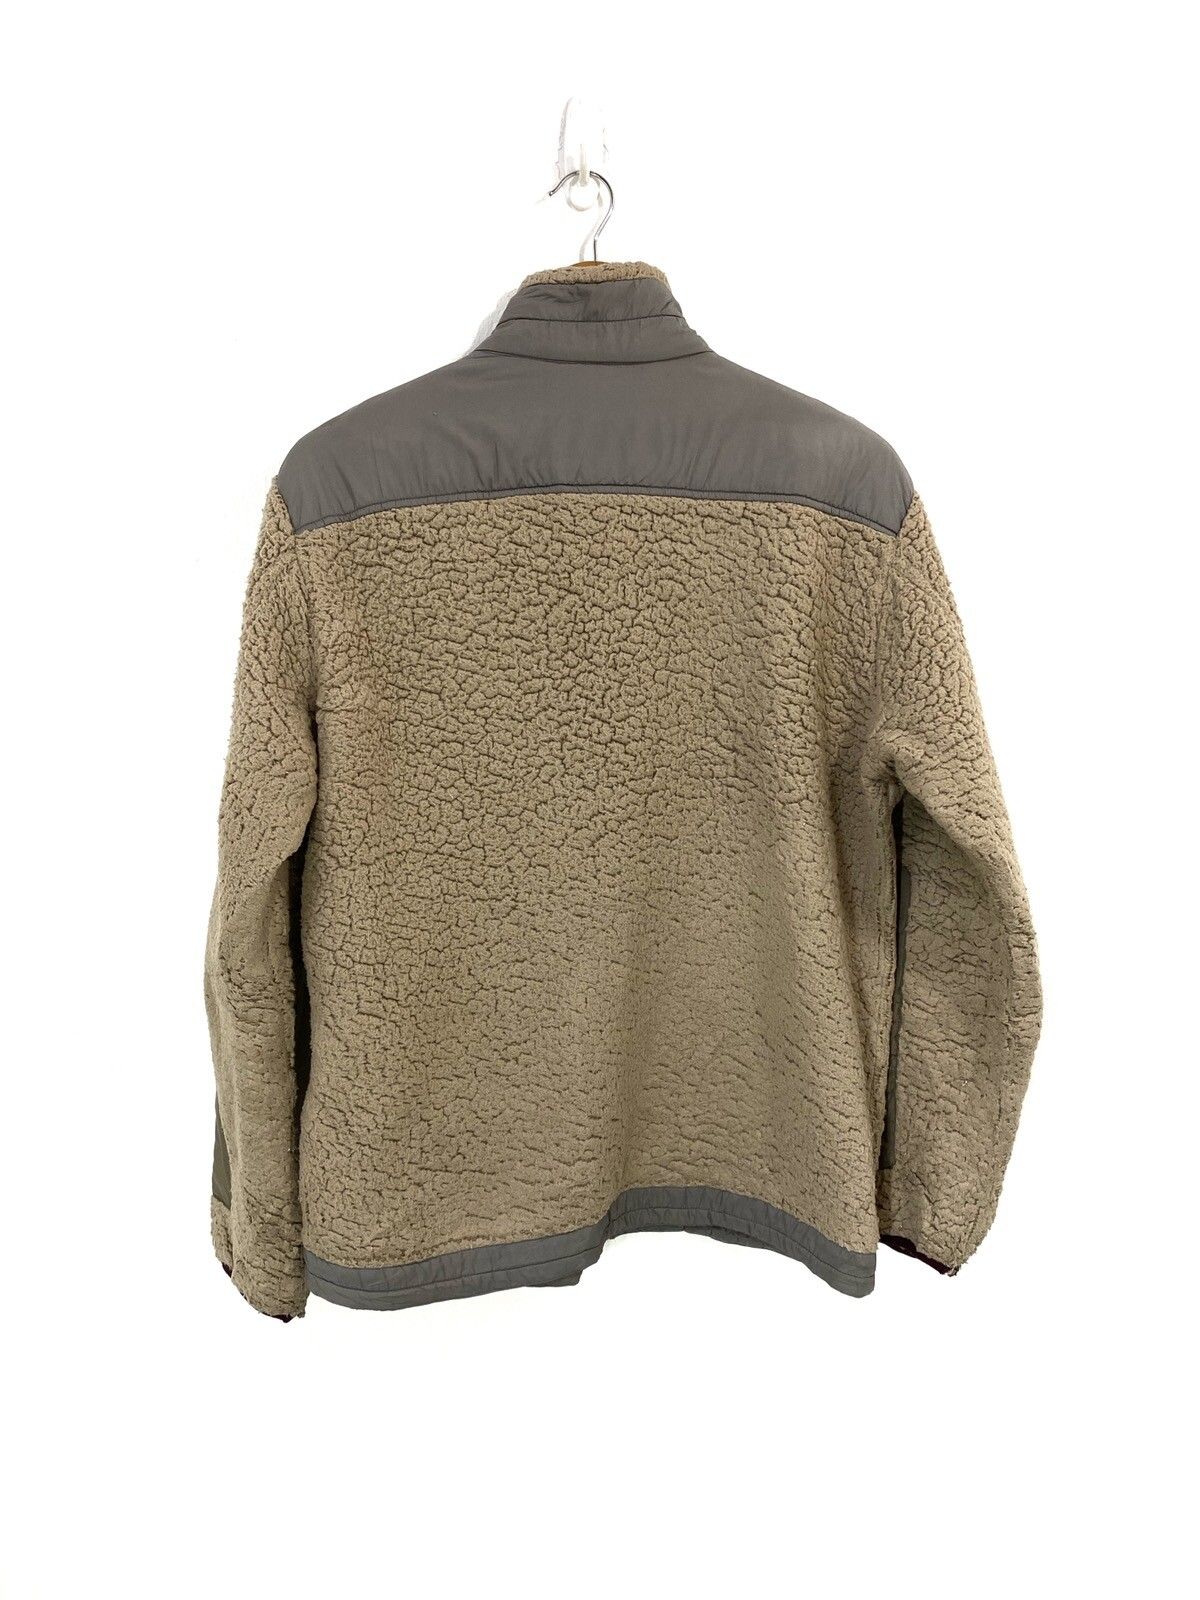 Fall/Winter 2012 Undercover X Uniqlo Fleece Jacket Design - 2